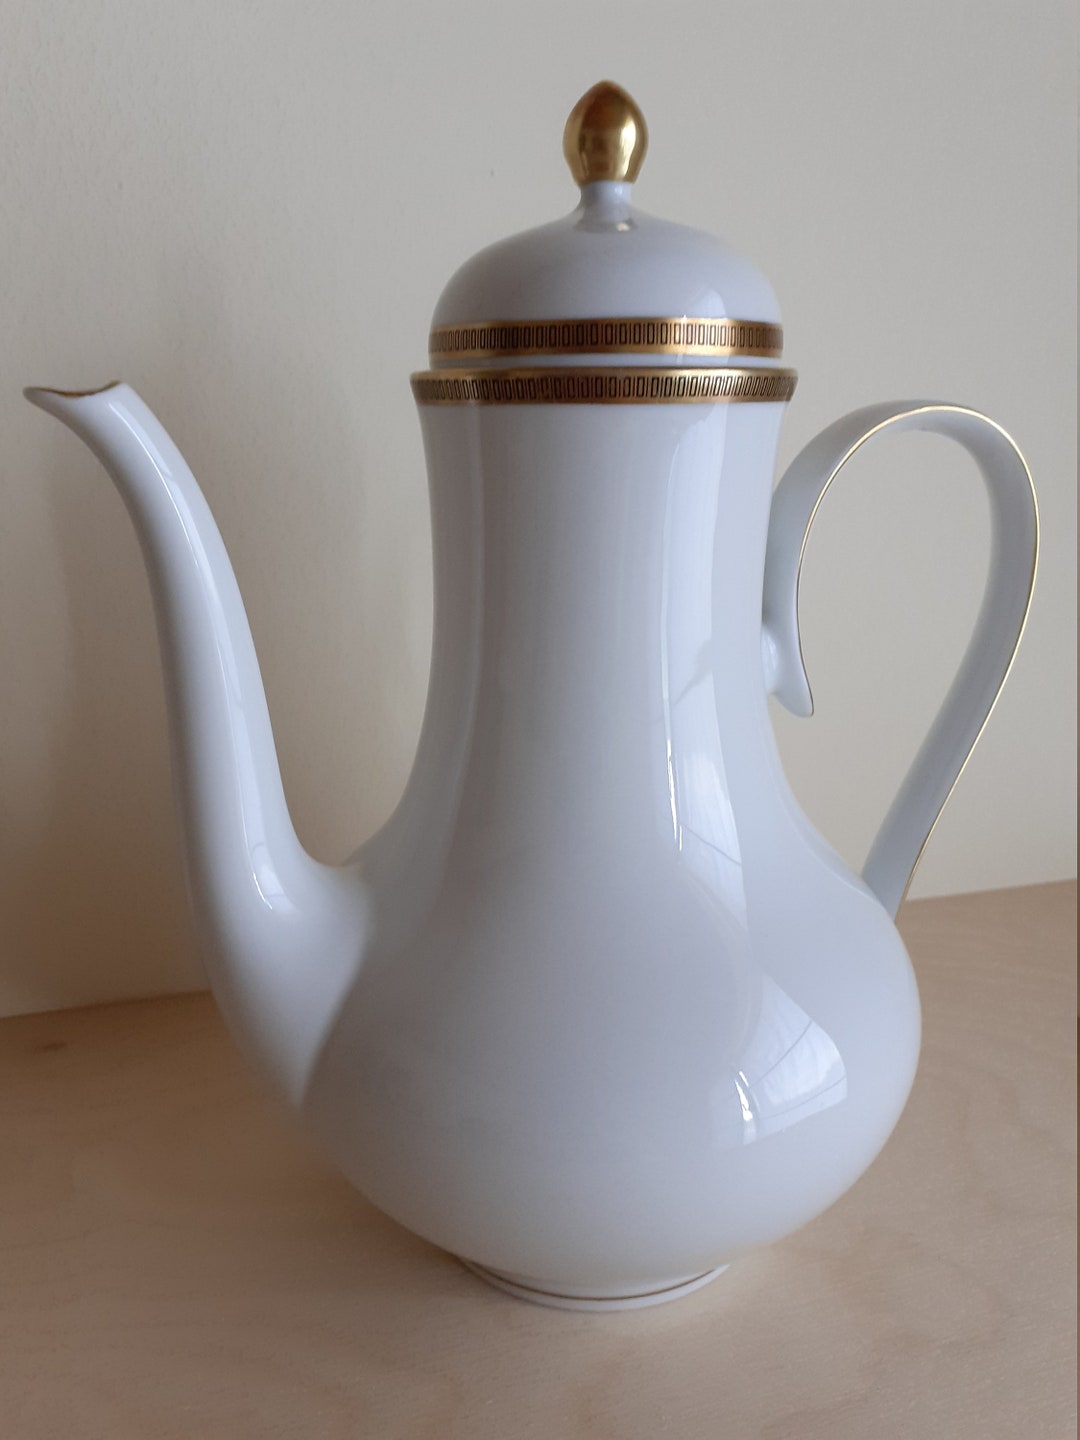 Elegant Eschenbach Bavaria Coffee Pot With Subtle Golden Trim - Etsy